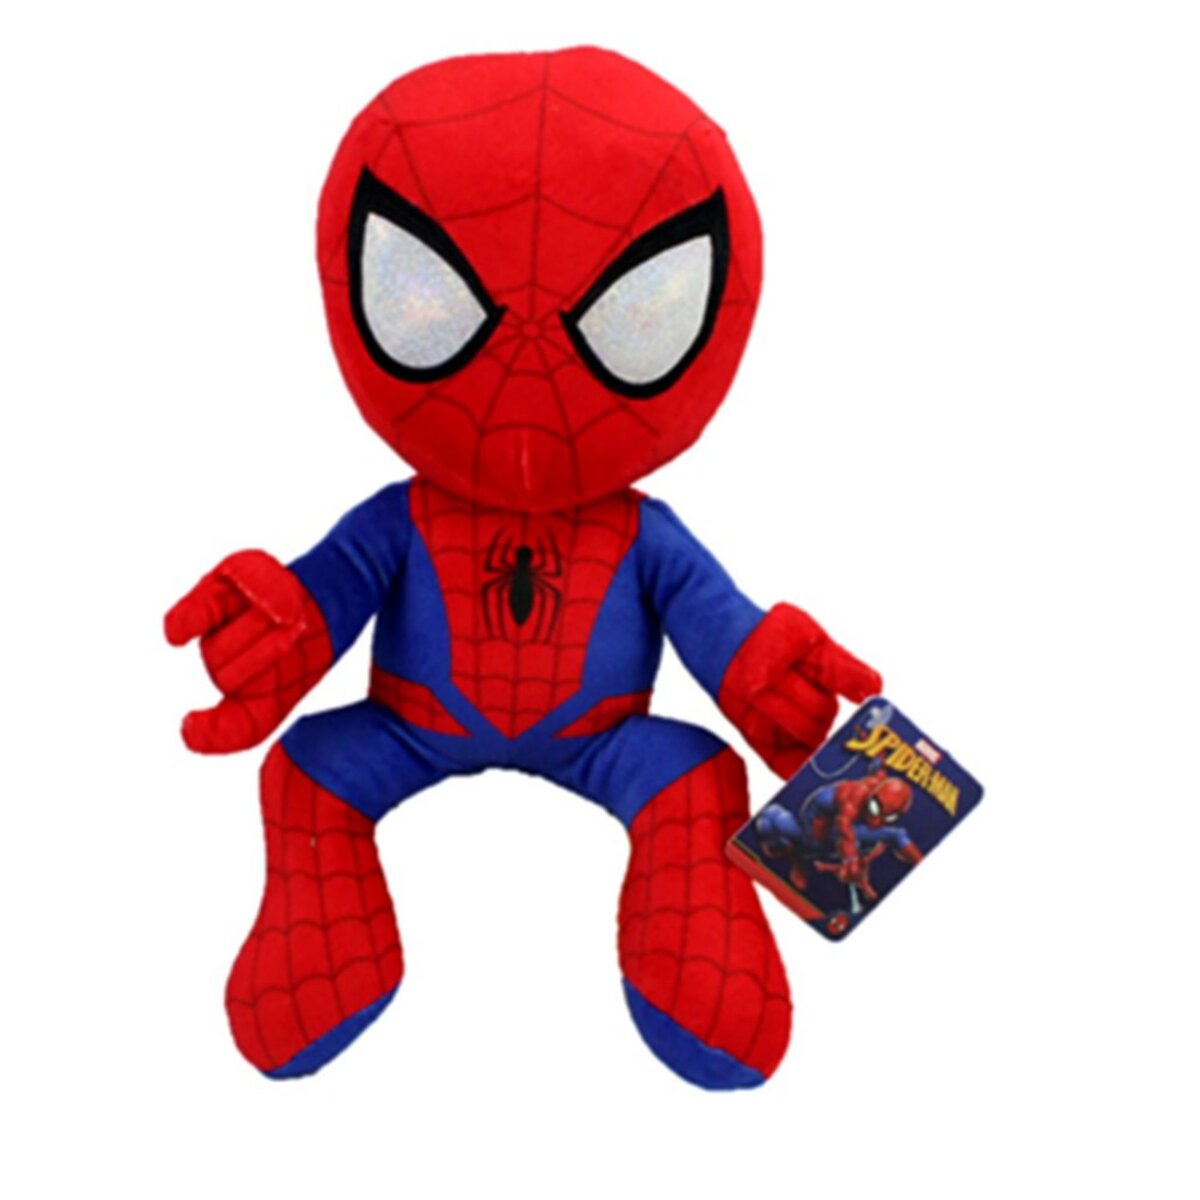  Grande peluche Spiderman 33 cm debout